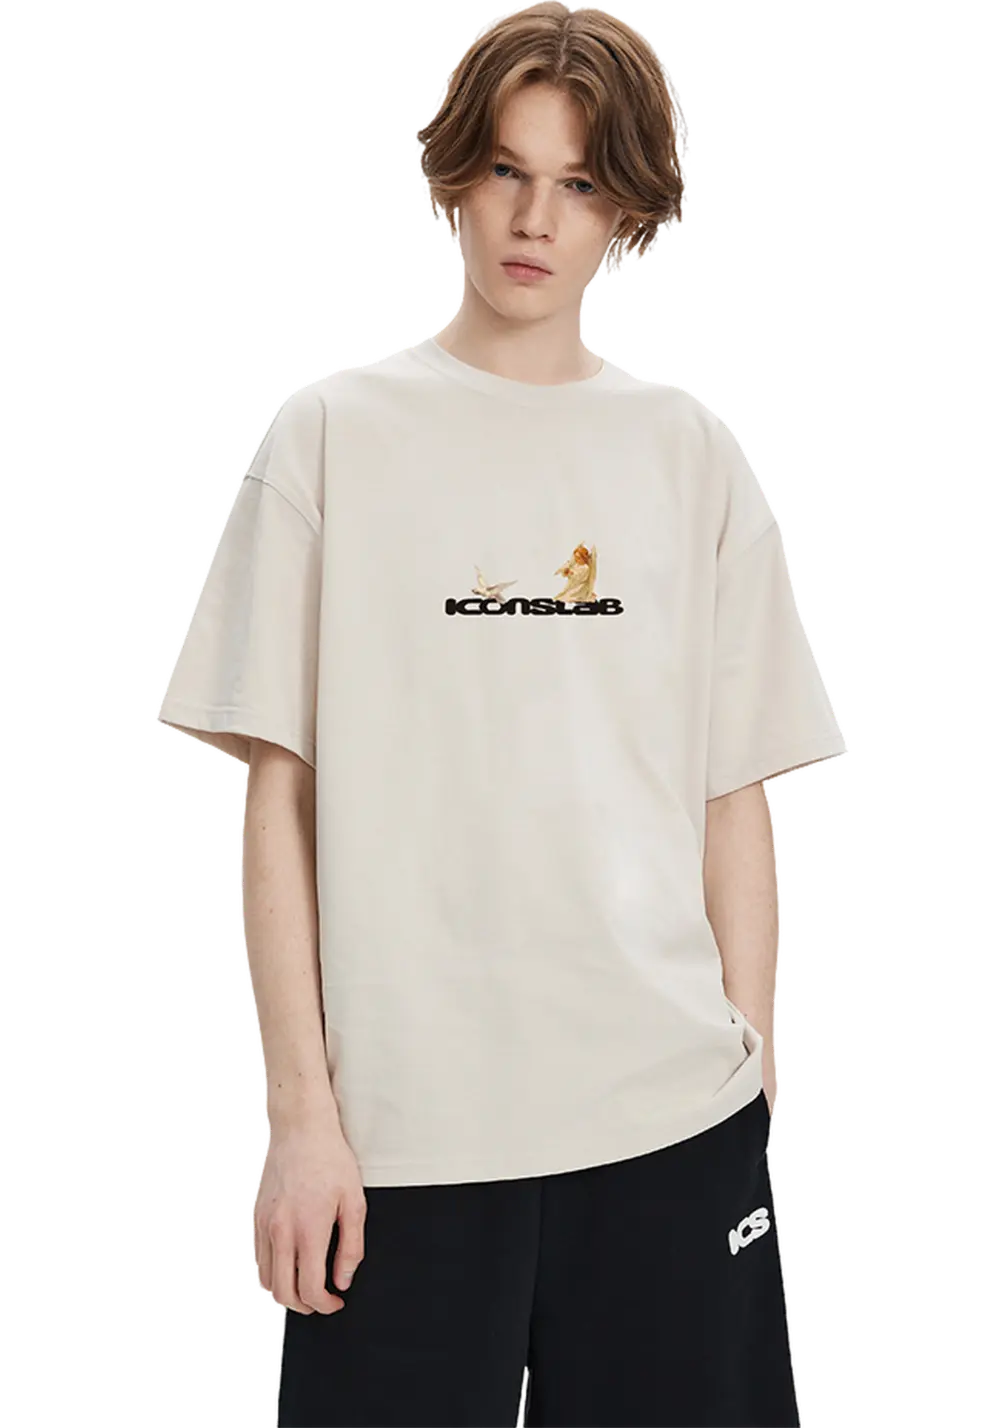 Angel Paradise T-shirt - PSYLOS 1, Angel Paradise T-shirt, T-Shirt, iconslab, PSYLOS 1